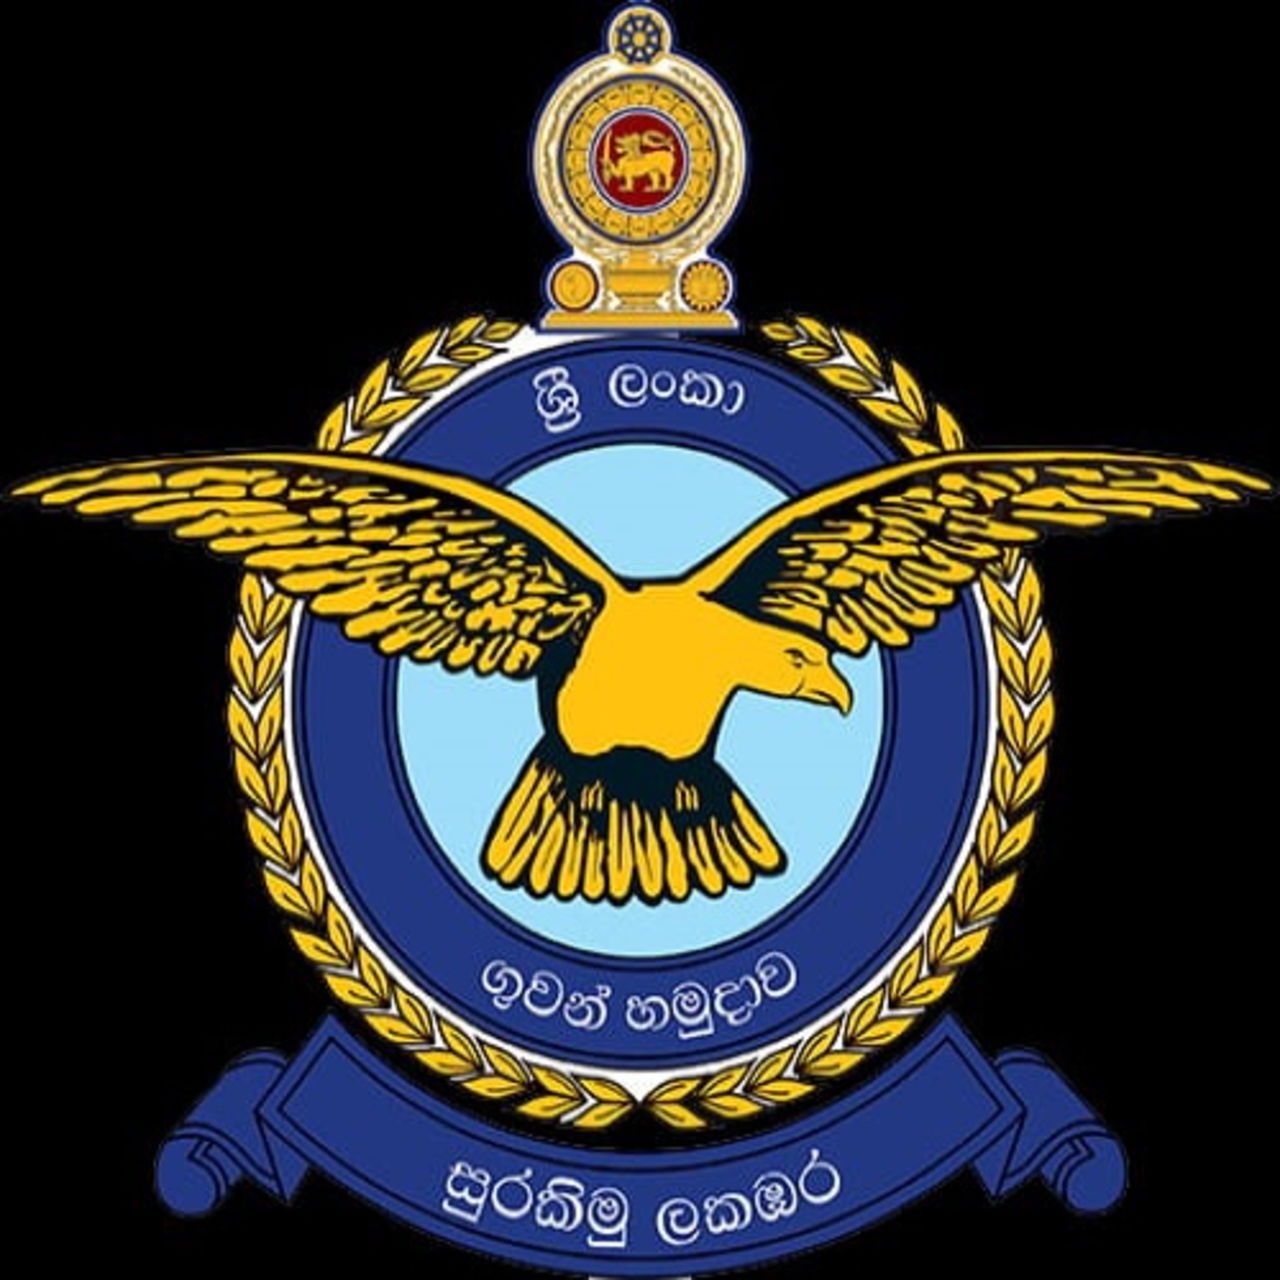 Sri Lanka Air Force cricket club team logo